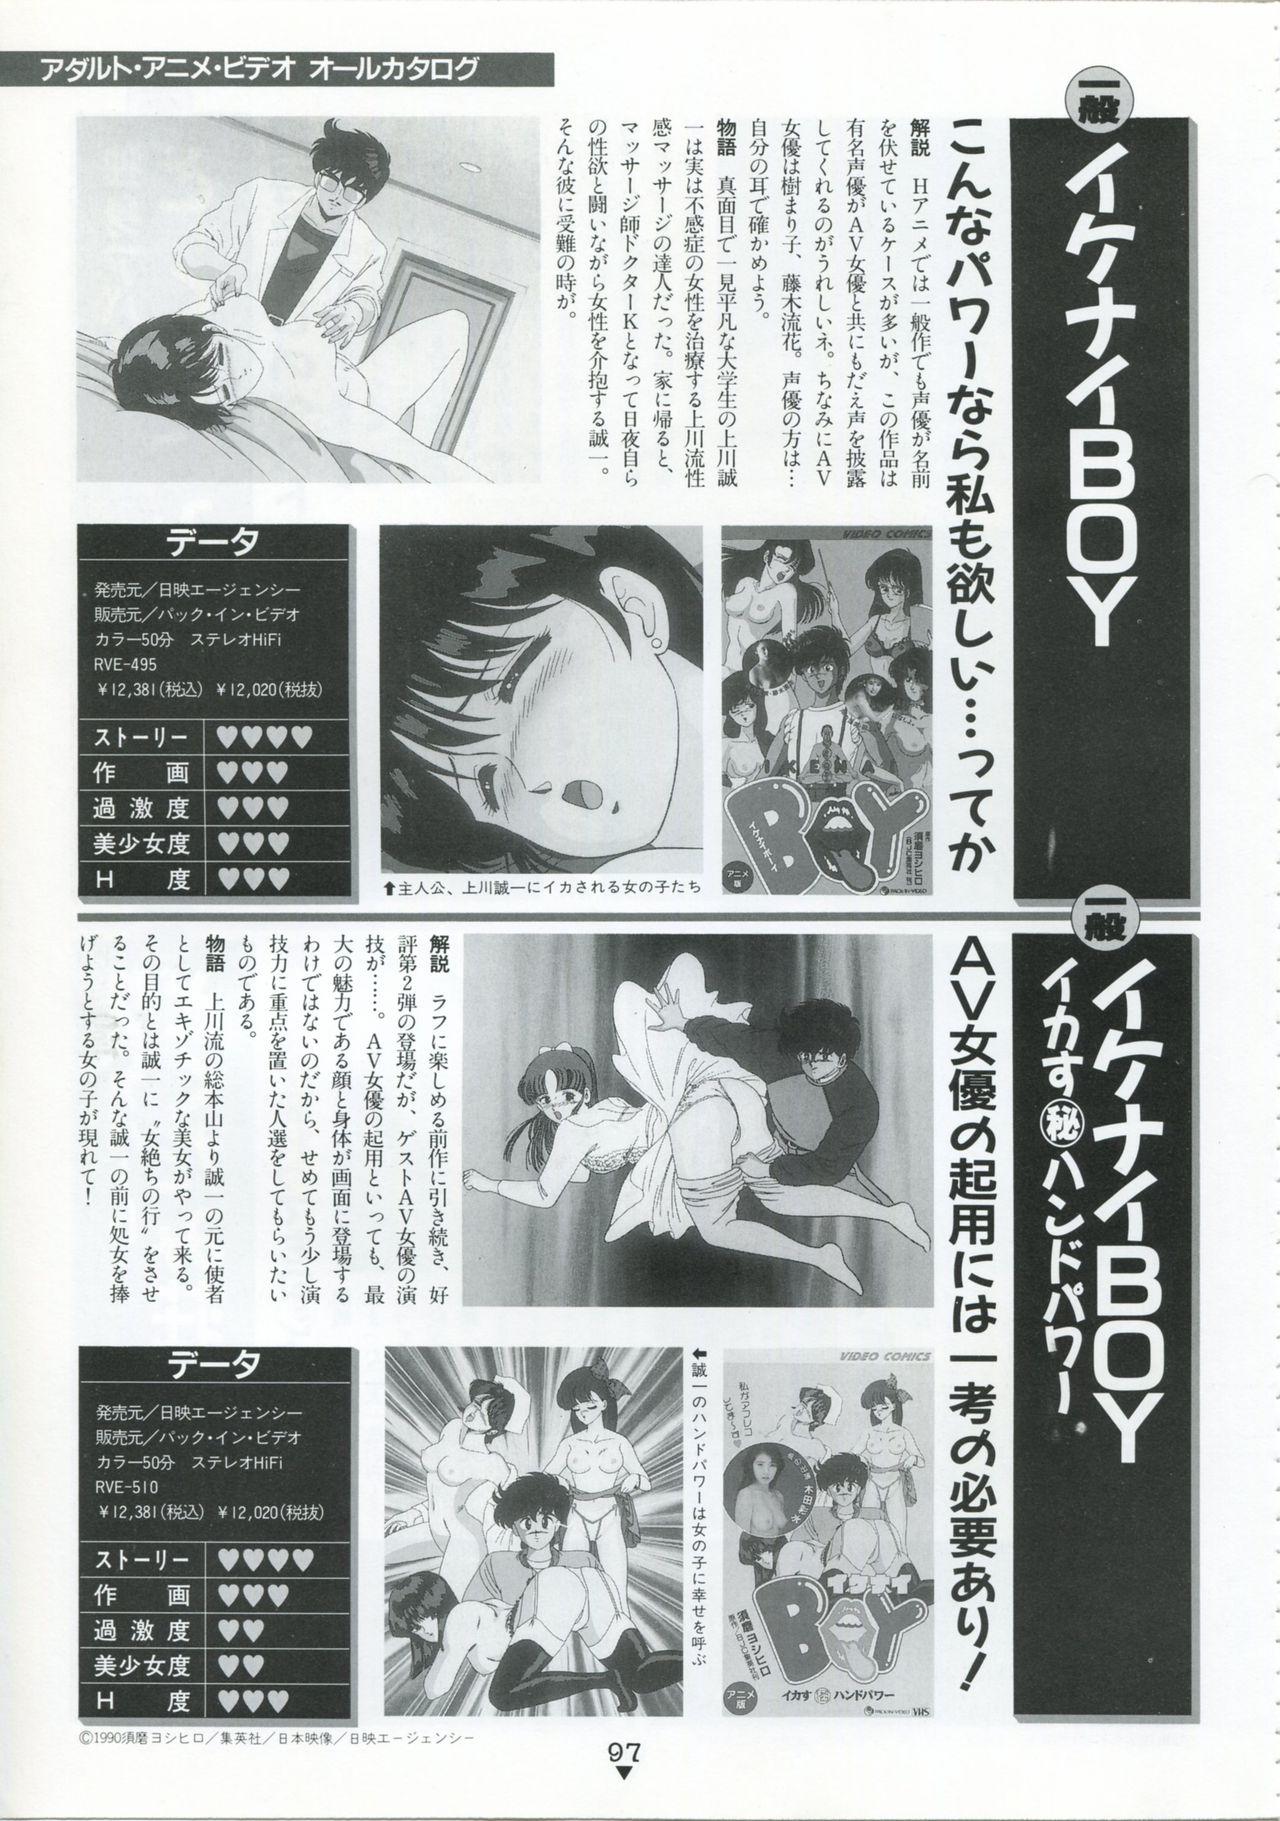 Bishoujo Anime Daizenshuu - Adult Animation Video Catalog 1991 92